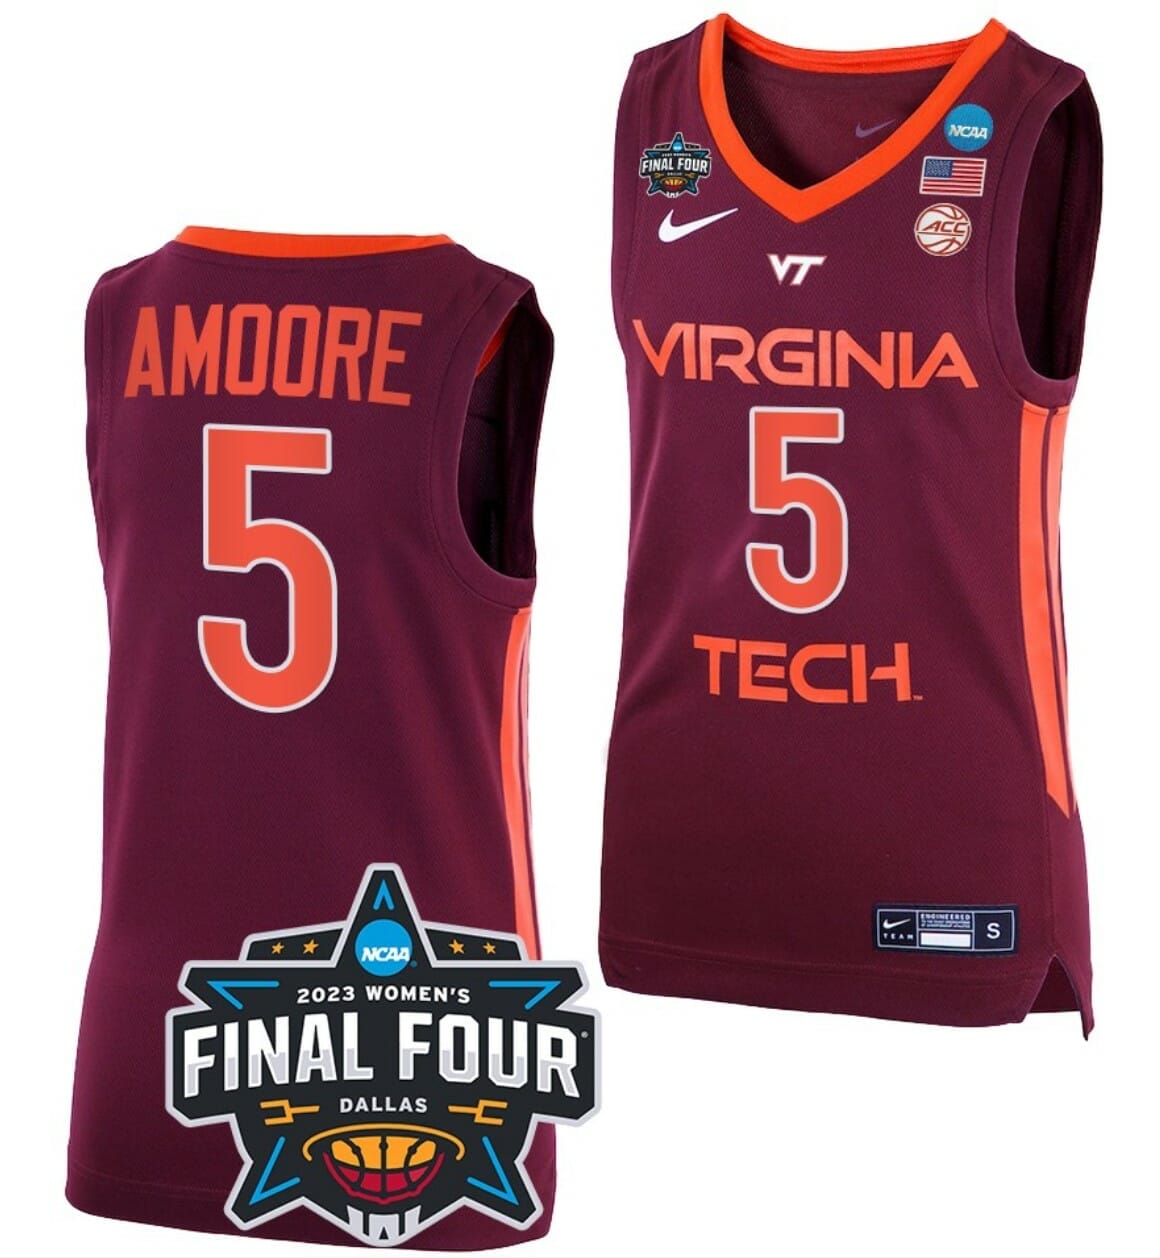 [Available] Buy Georgia Amoore Jersey Virginia Tech Hokies